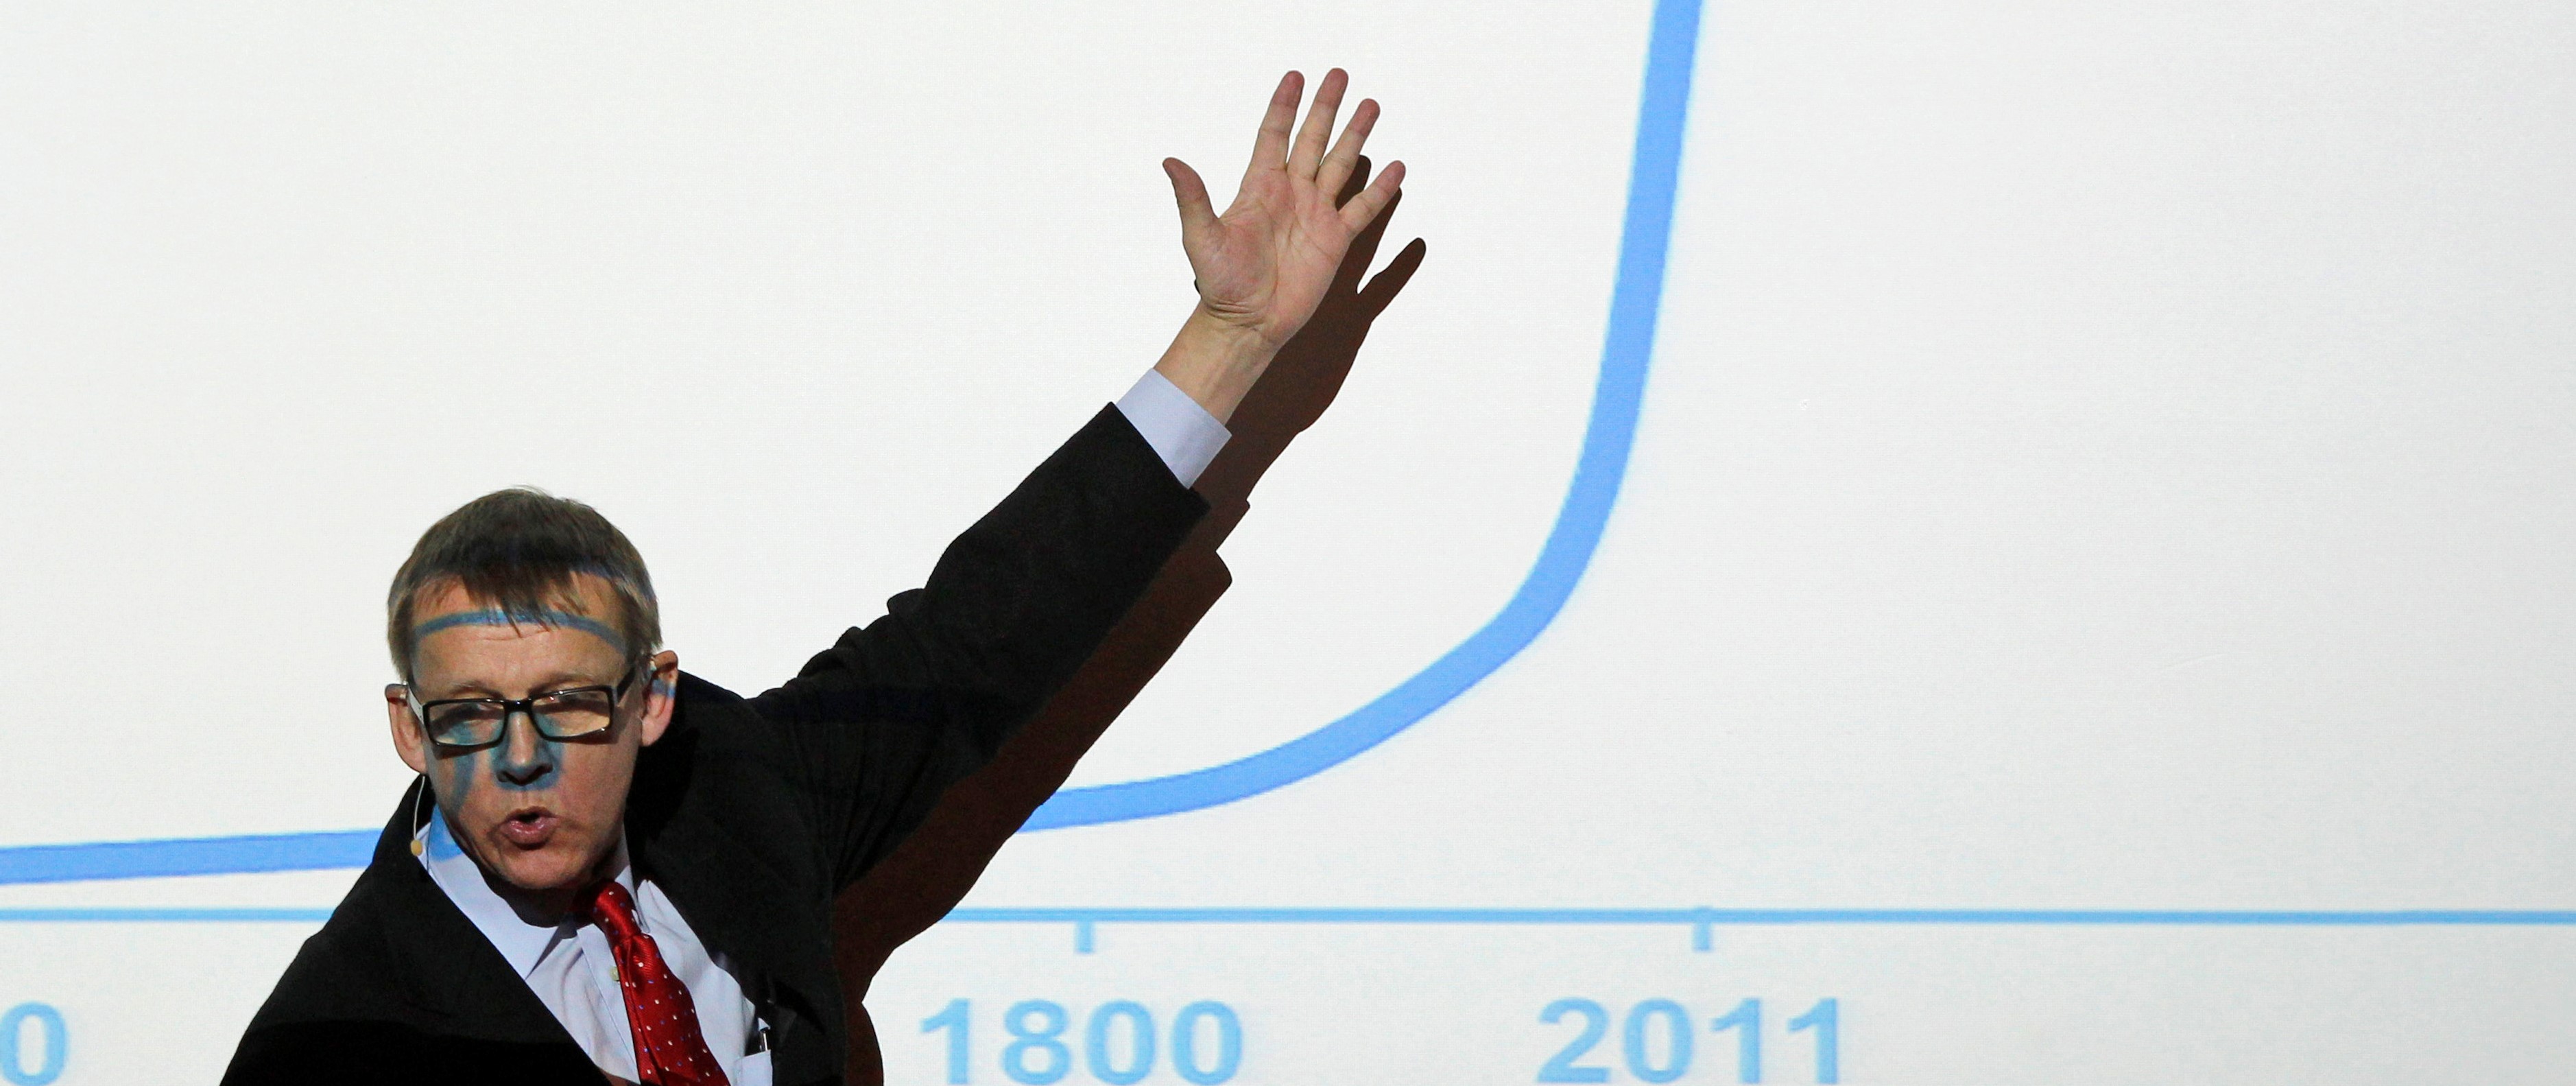 Hans Rosling: Data magician and 'edutainer' dies at 68